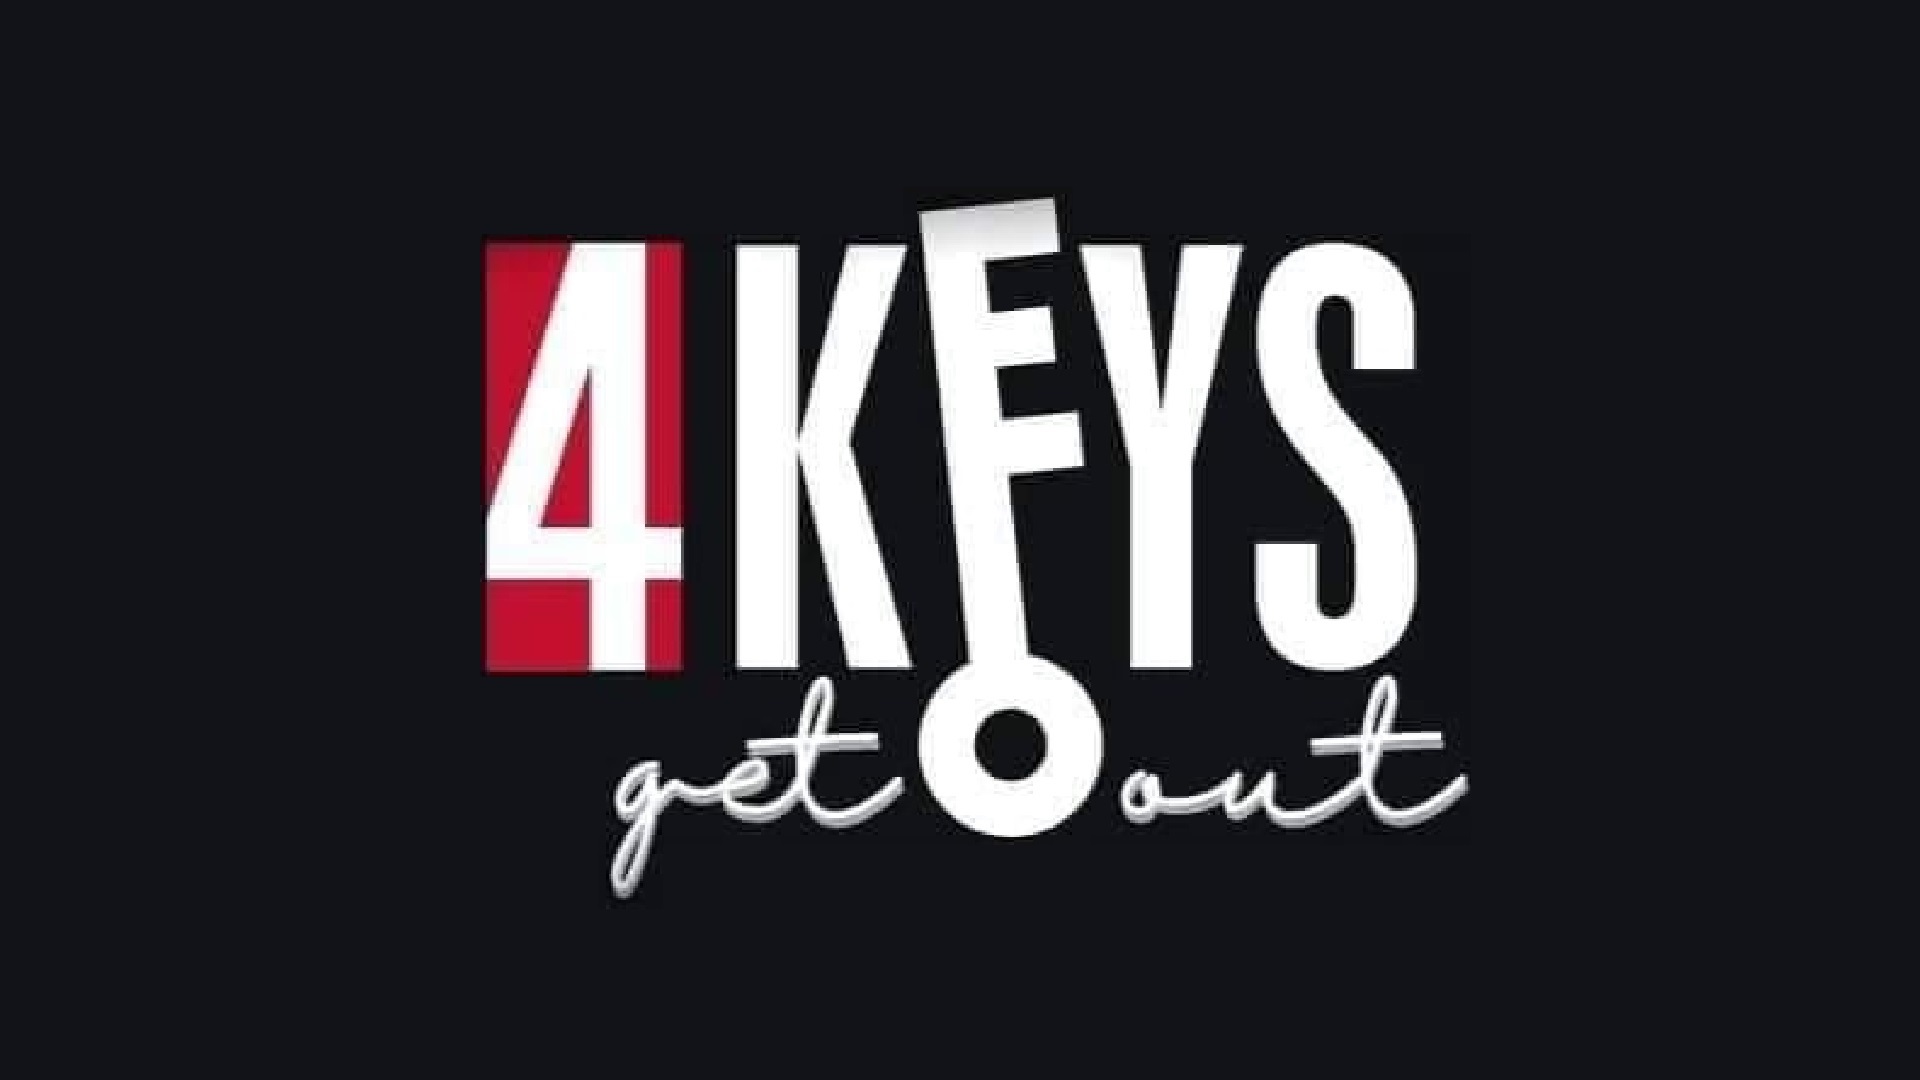 4 Keys